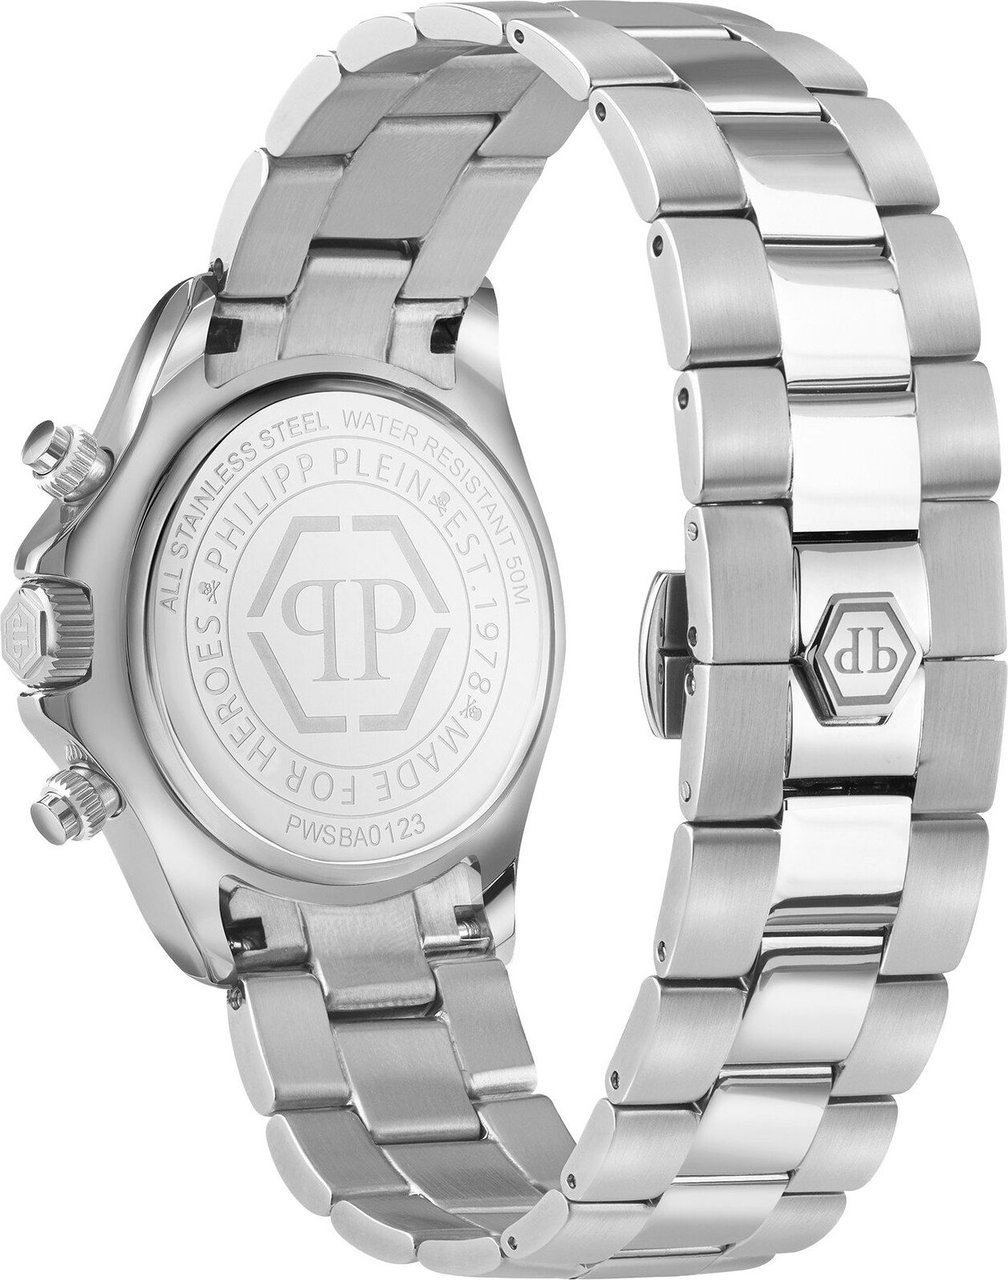 Philipp Plein PWSBA0123 Nobile Lady horloge 38 mm Zilver